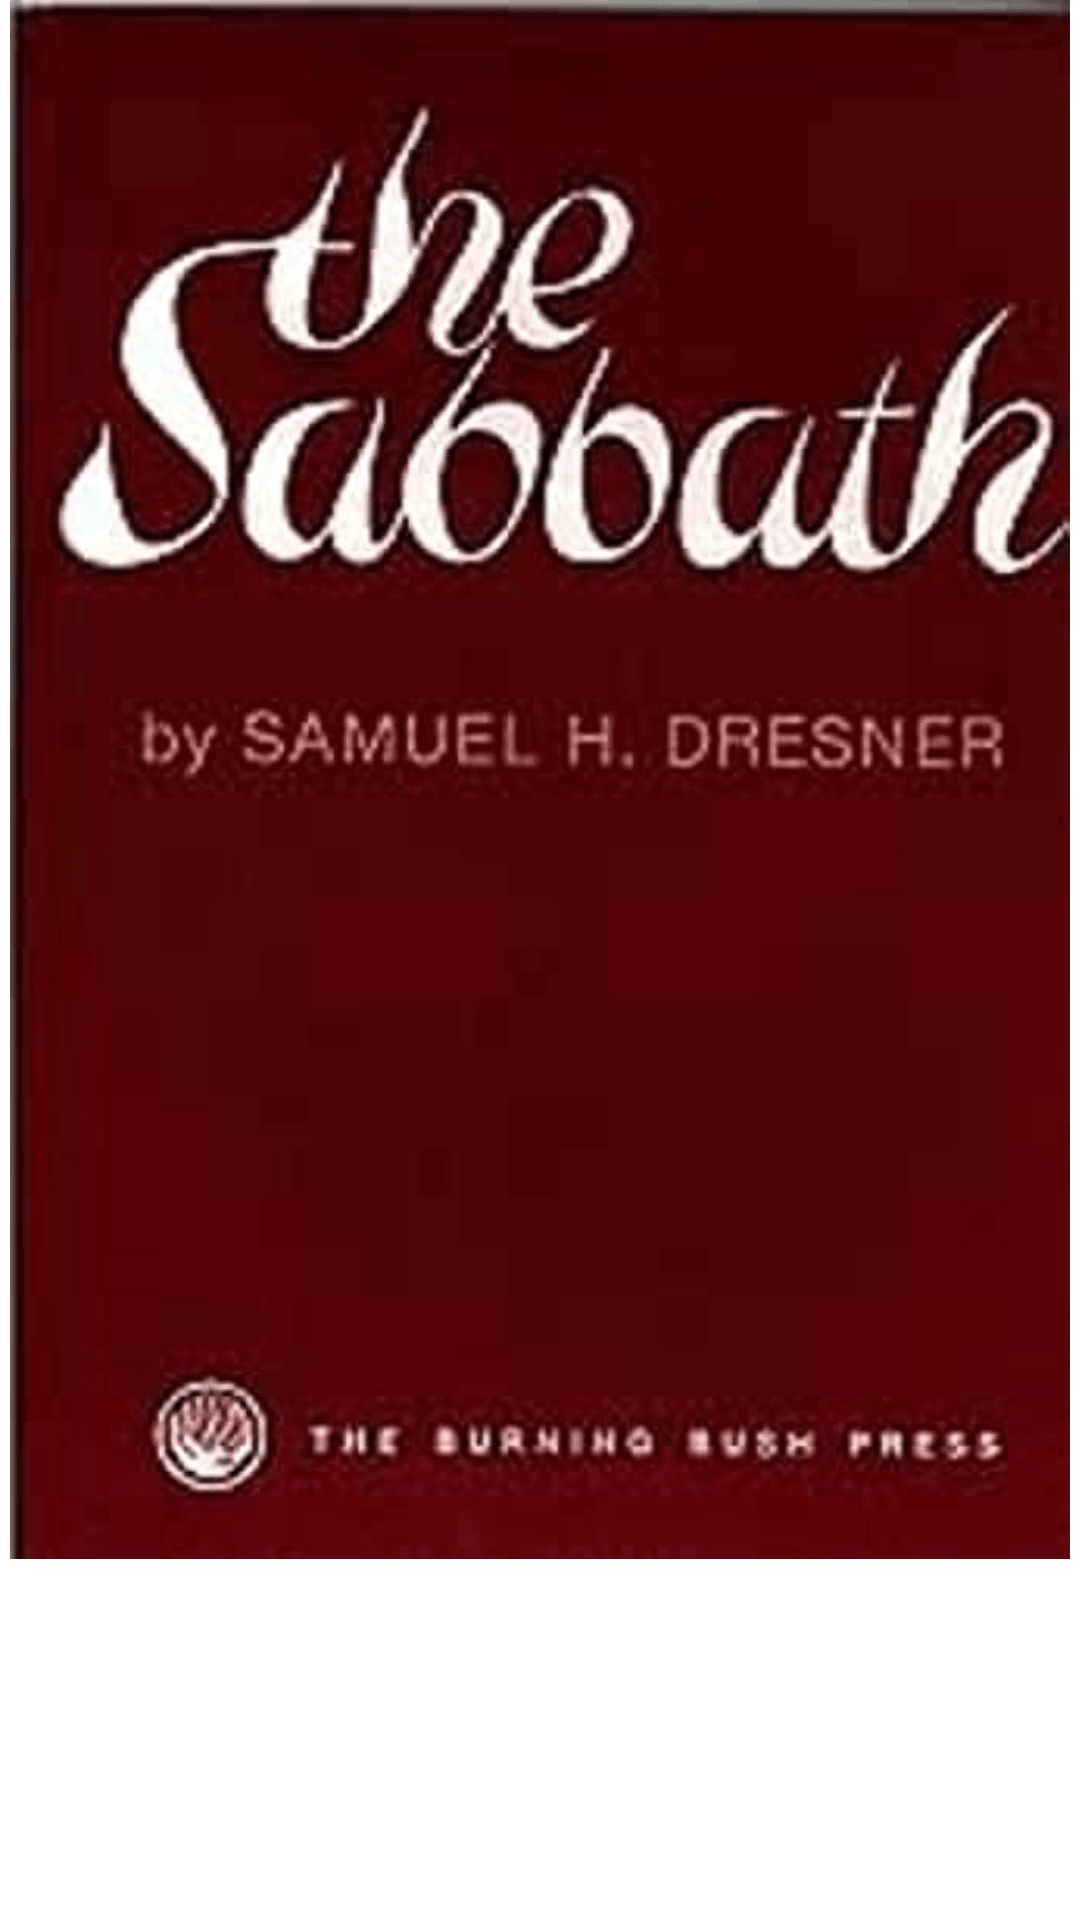 The Sabbath by Samuel H. Dresner